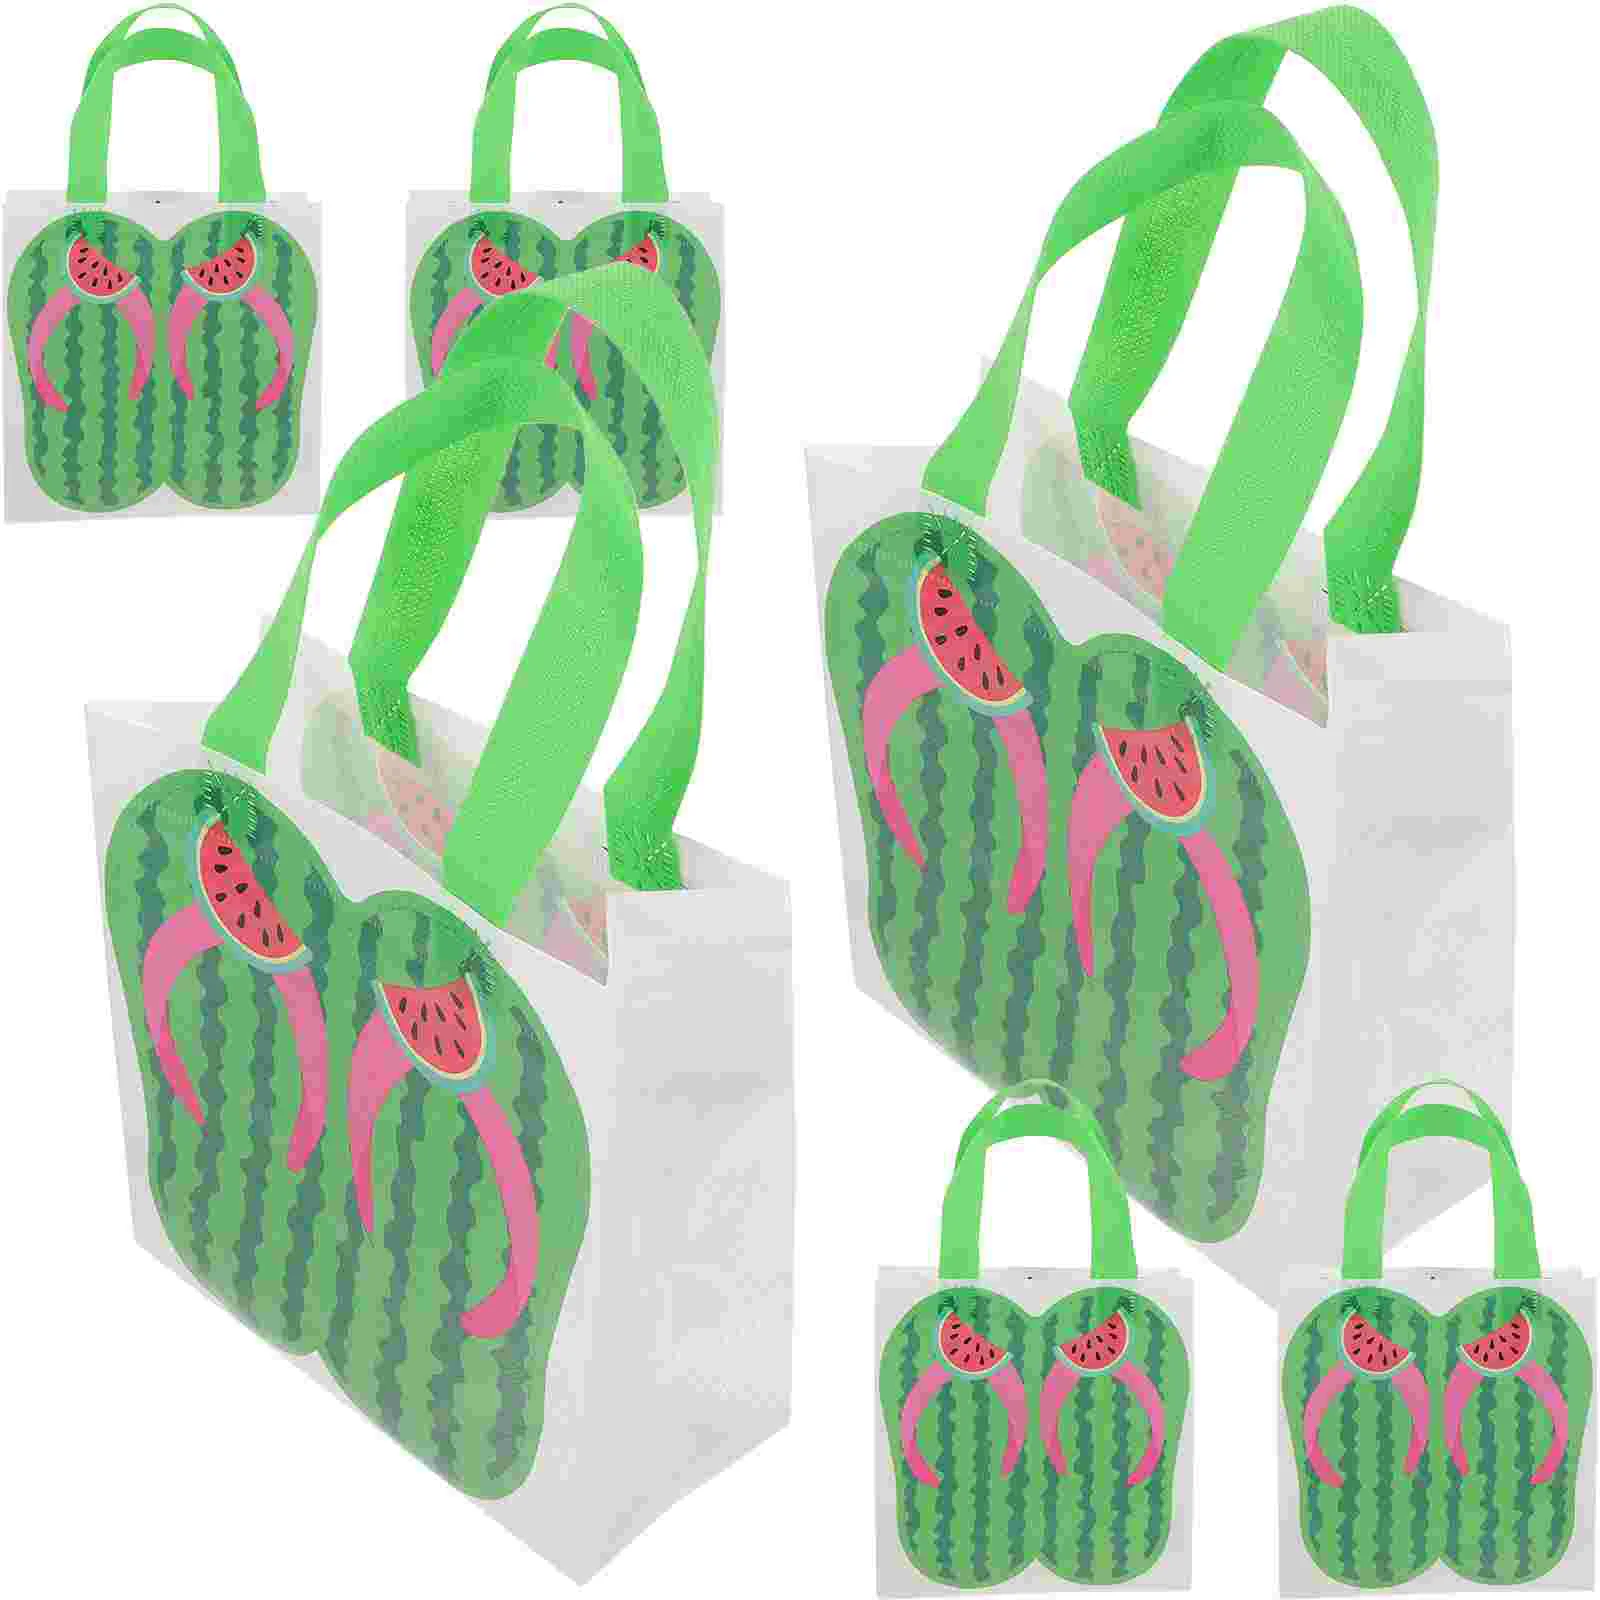 

6pcs Portable Luau Party Favor Bags Delicate Party Gift Bags Summer Beach Supplies